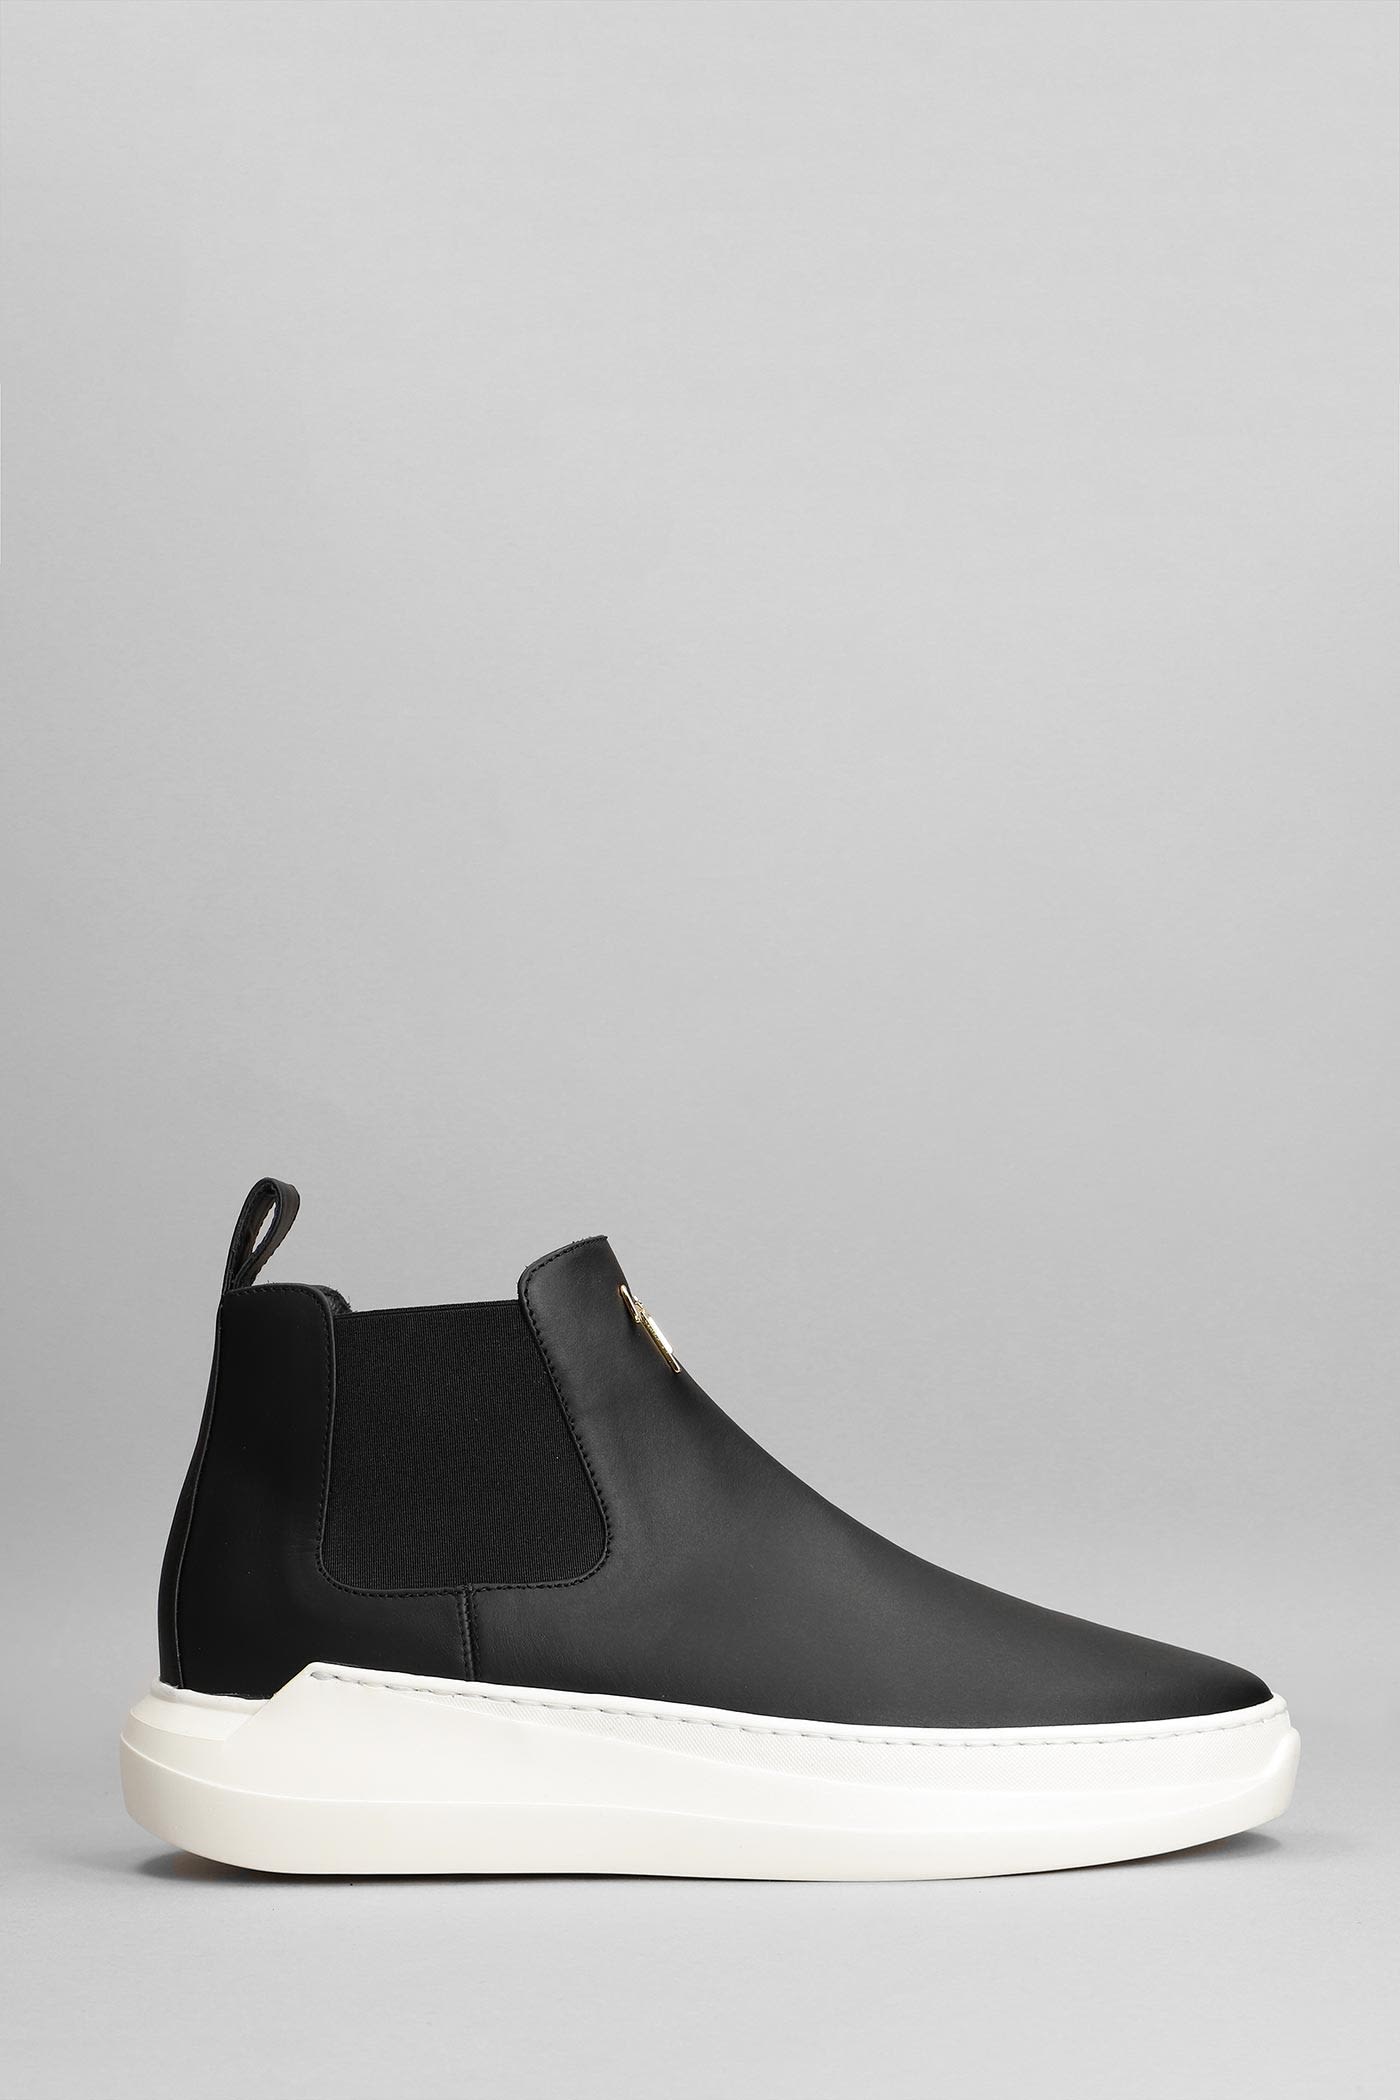 Giuseppe Zanotti Conley High Sneakers In Black Leather